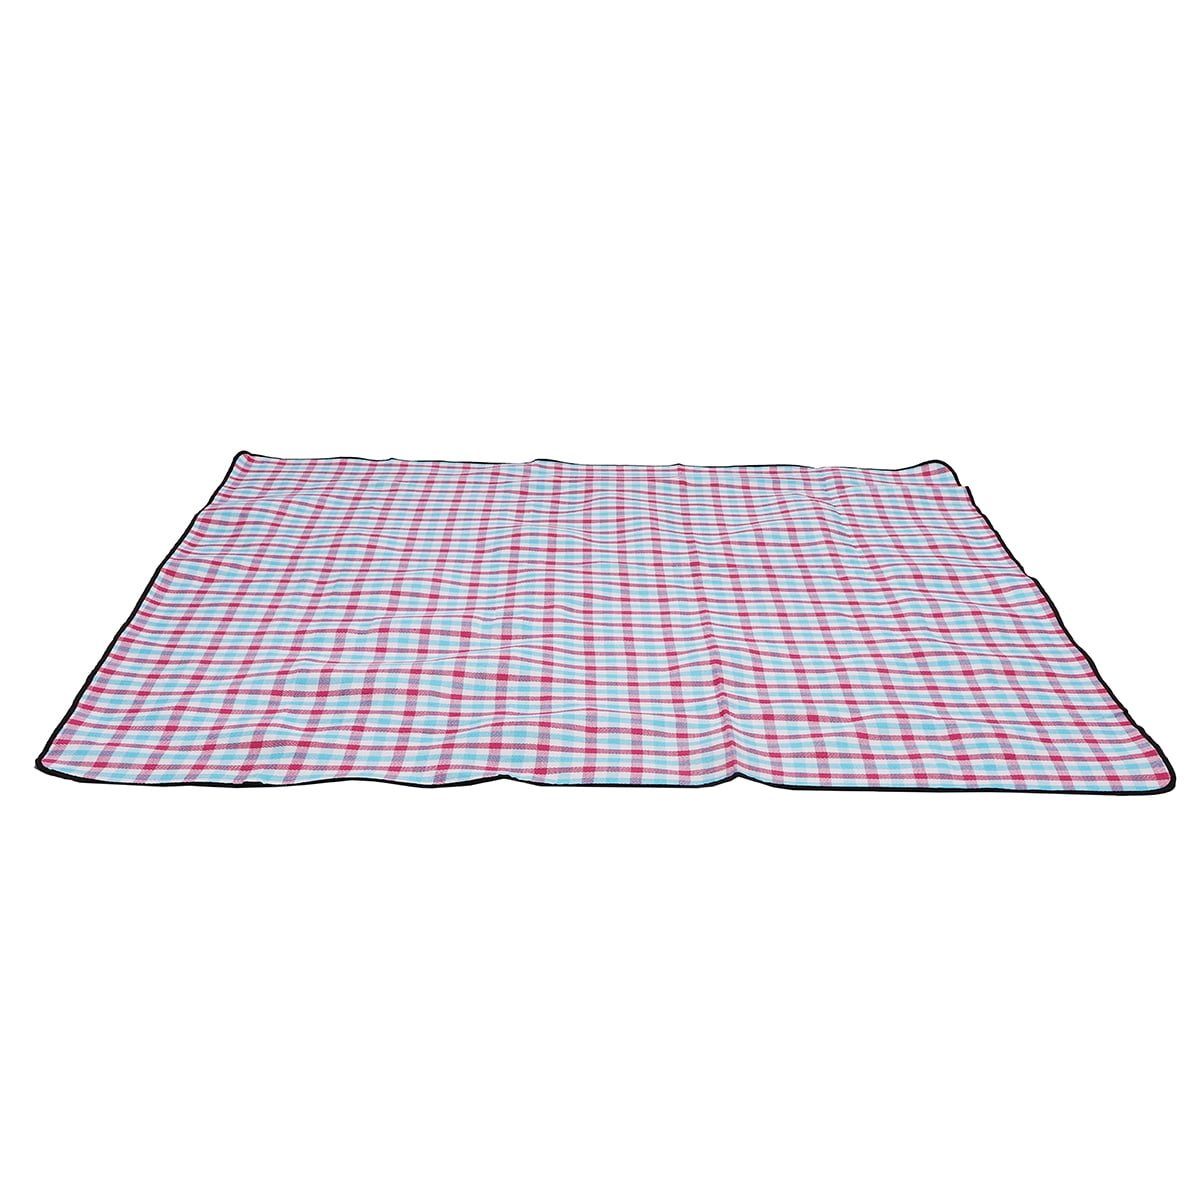 79''x 79'' Extra Large Picnic Blanket,Oversized Outdoor Blanket 